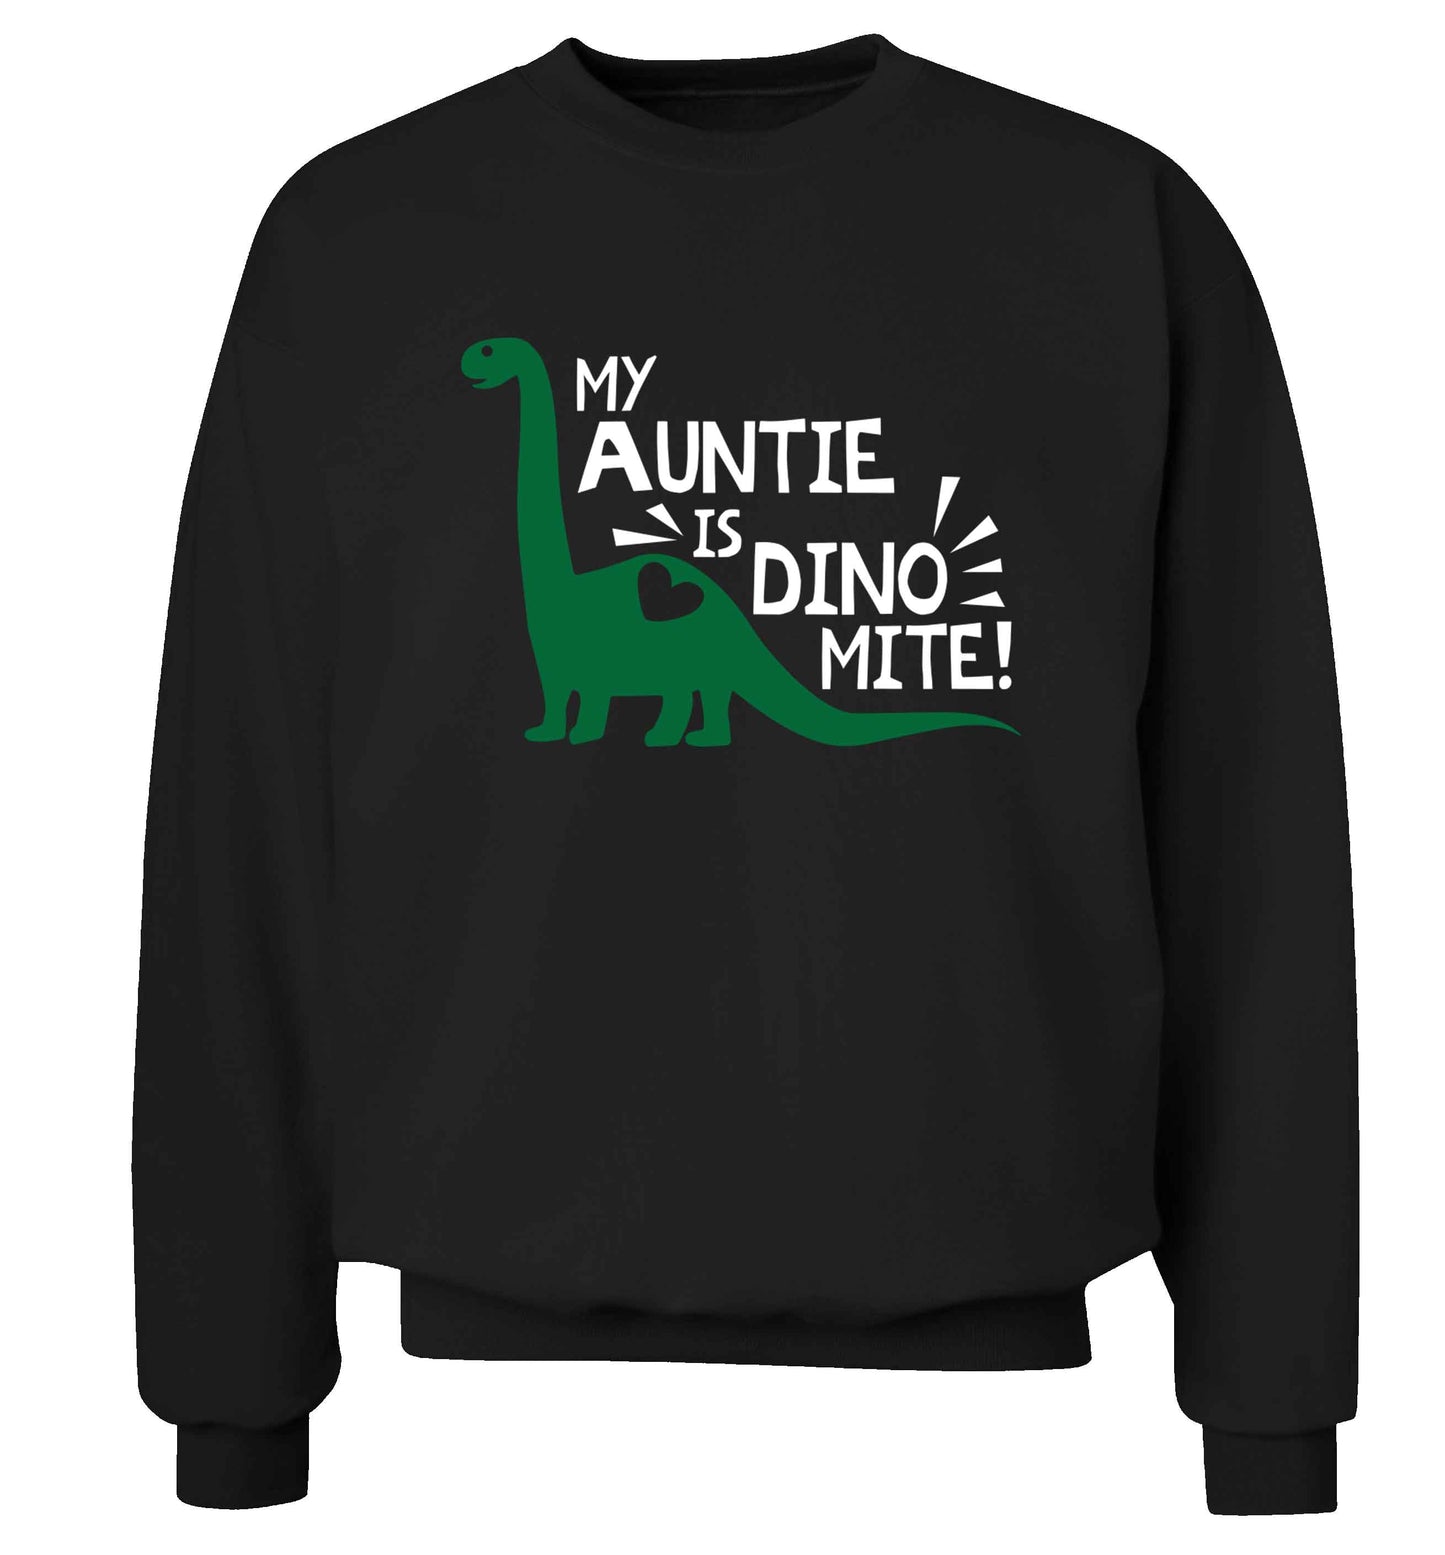 My auntie is dinomite! Adult's unisex black Sweater 2XL